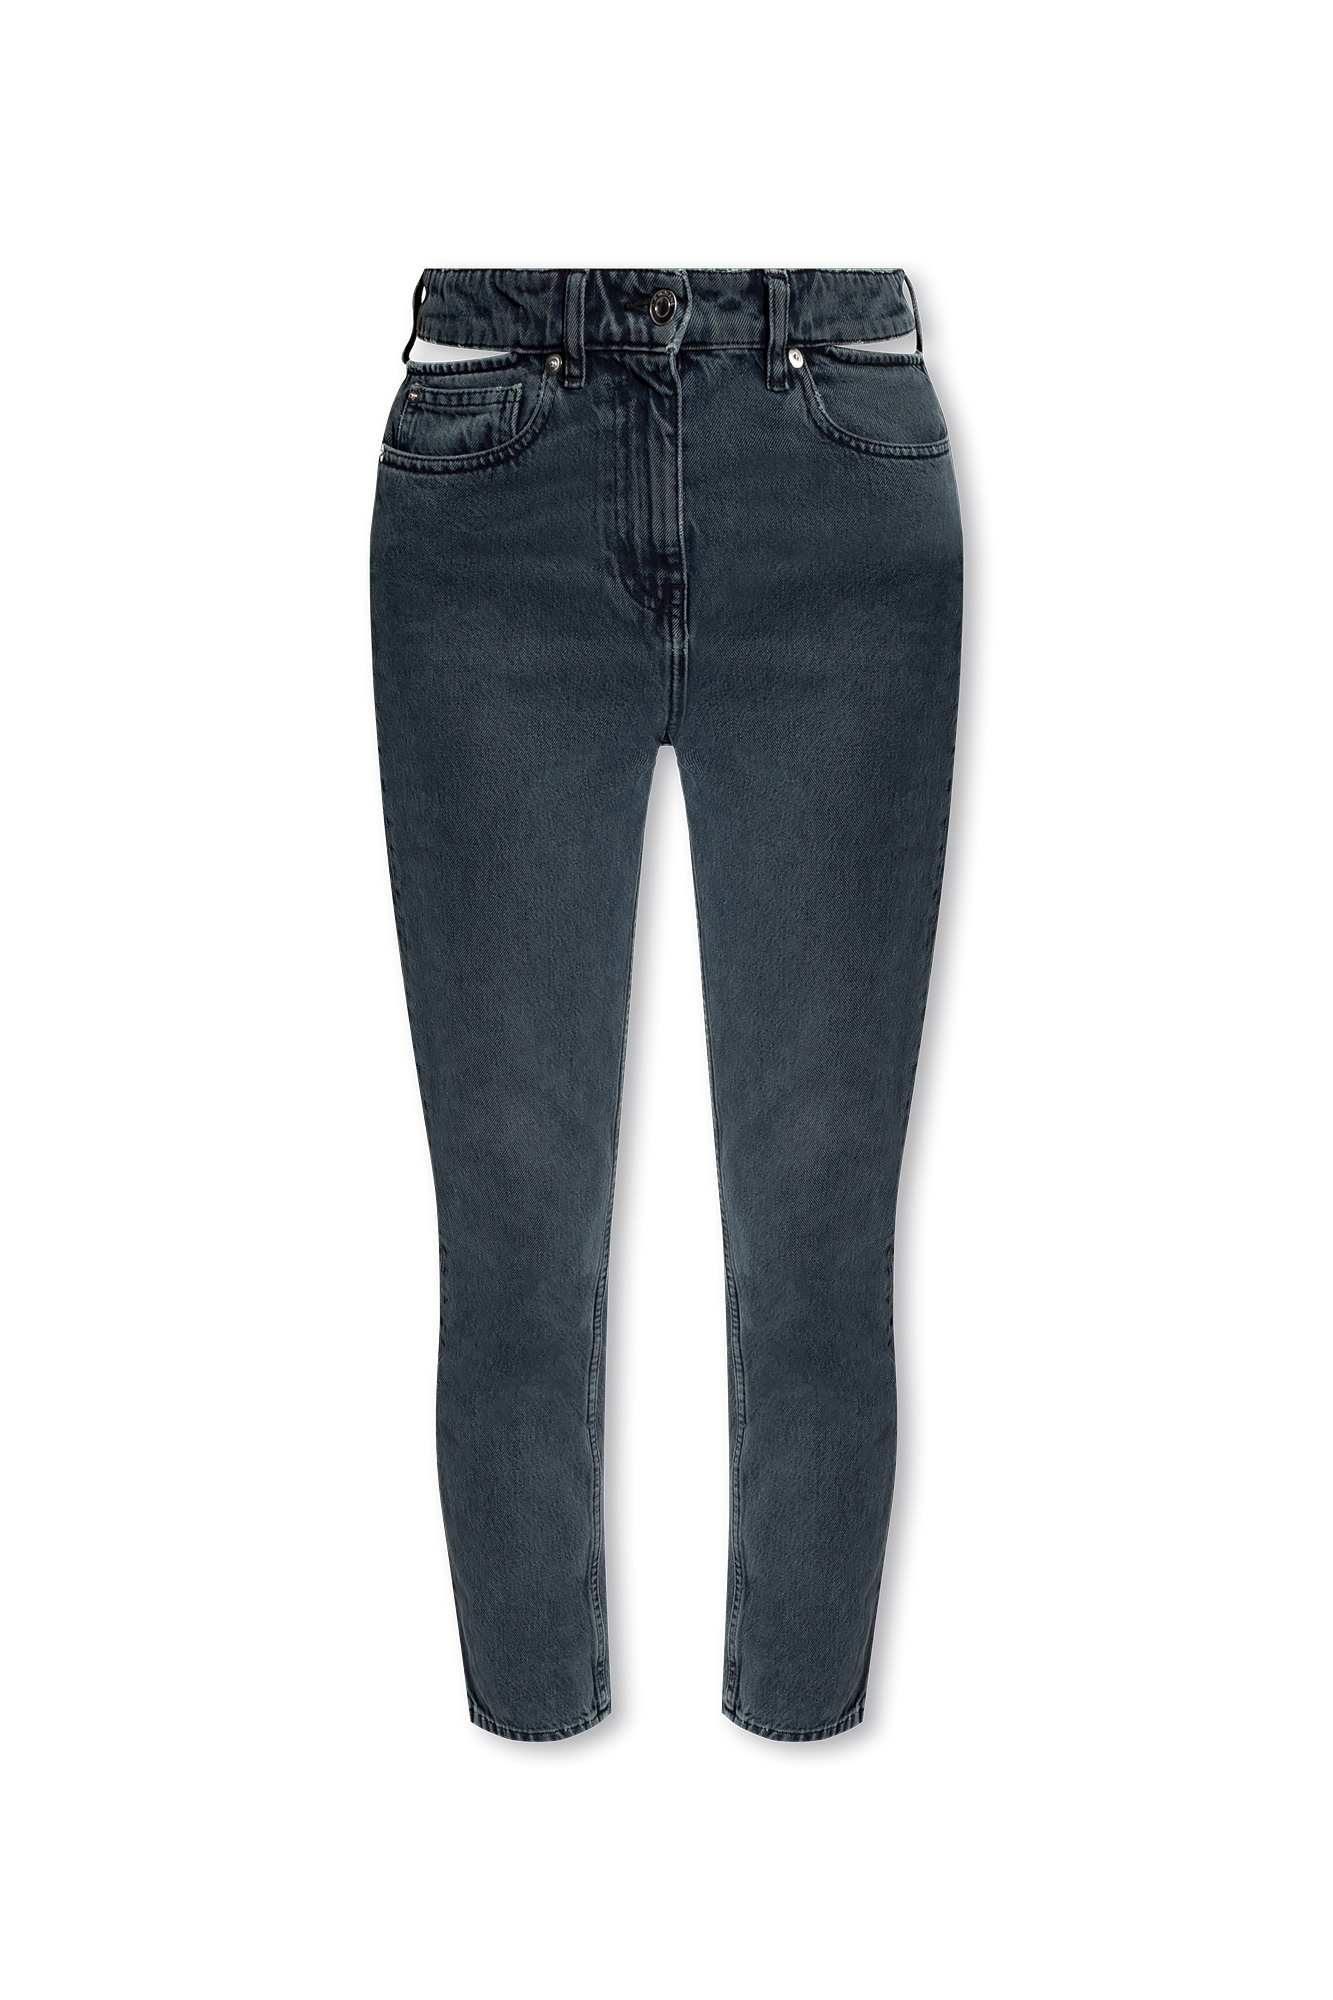 GenesinlifeShops GB - Black Distressed jeans Iro - Spyder Legging